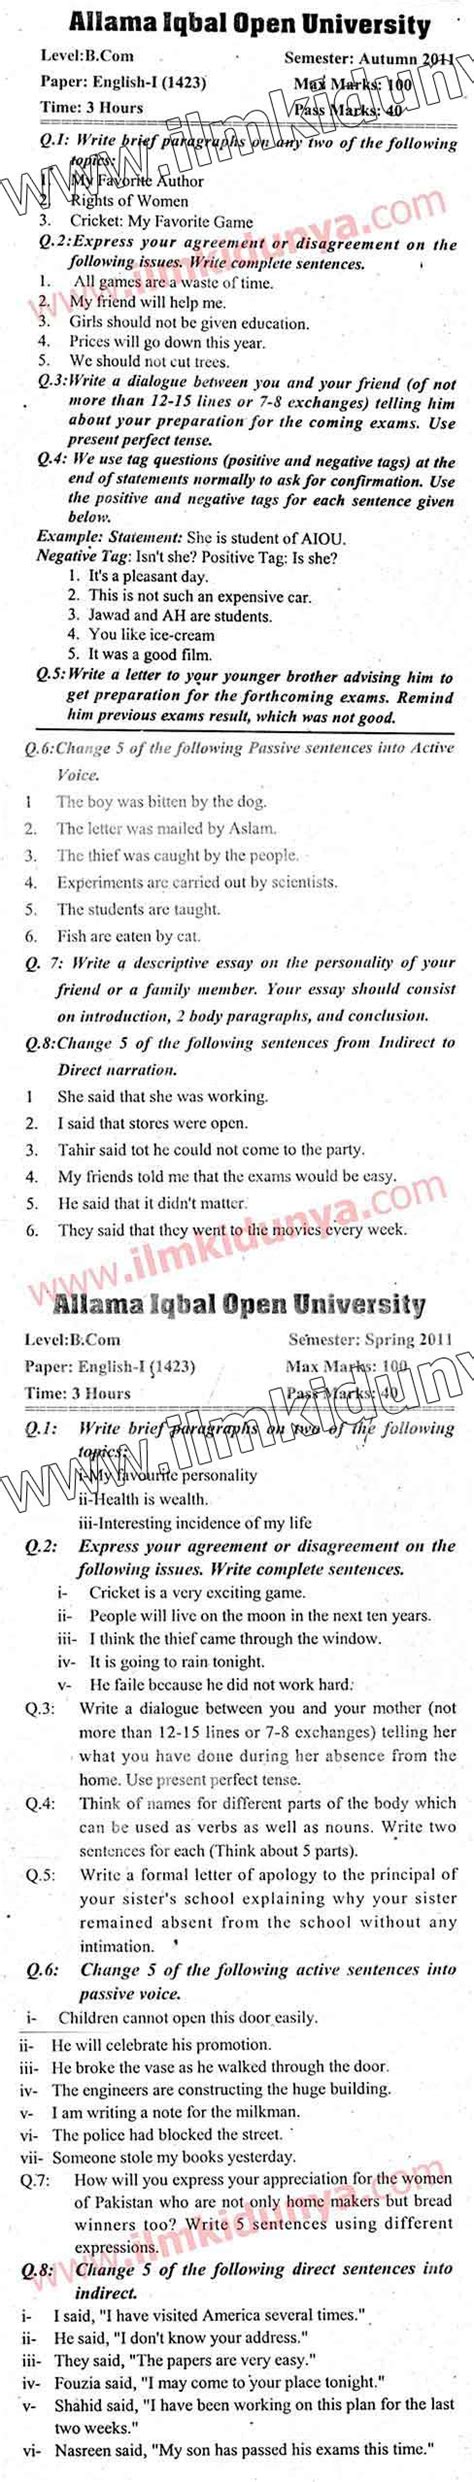 Past Papers 2011 Allama Iqbal Open University Bcom English 1423